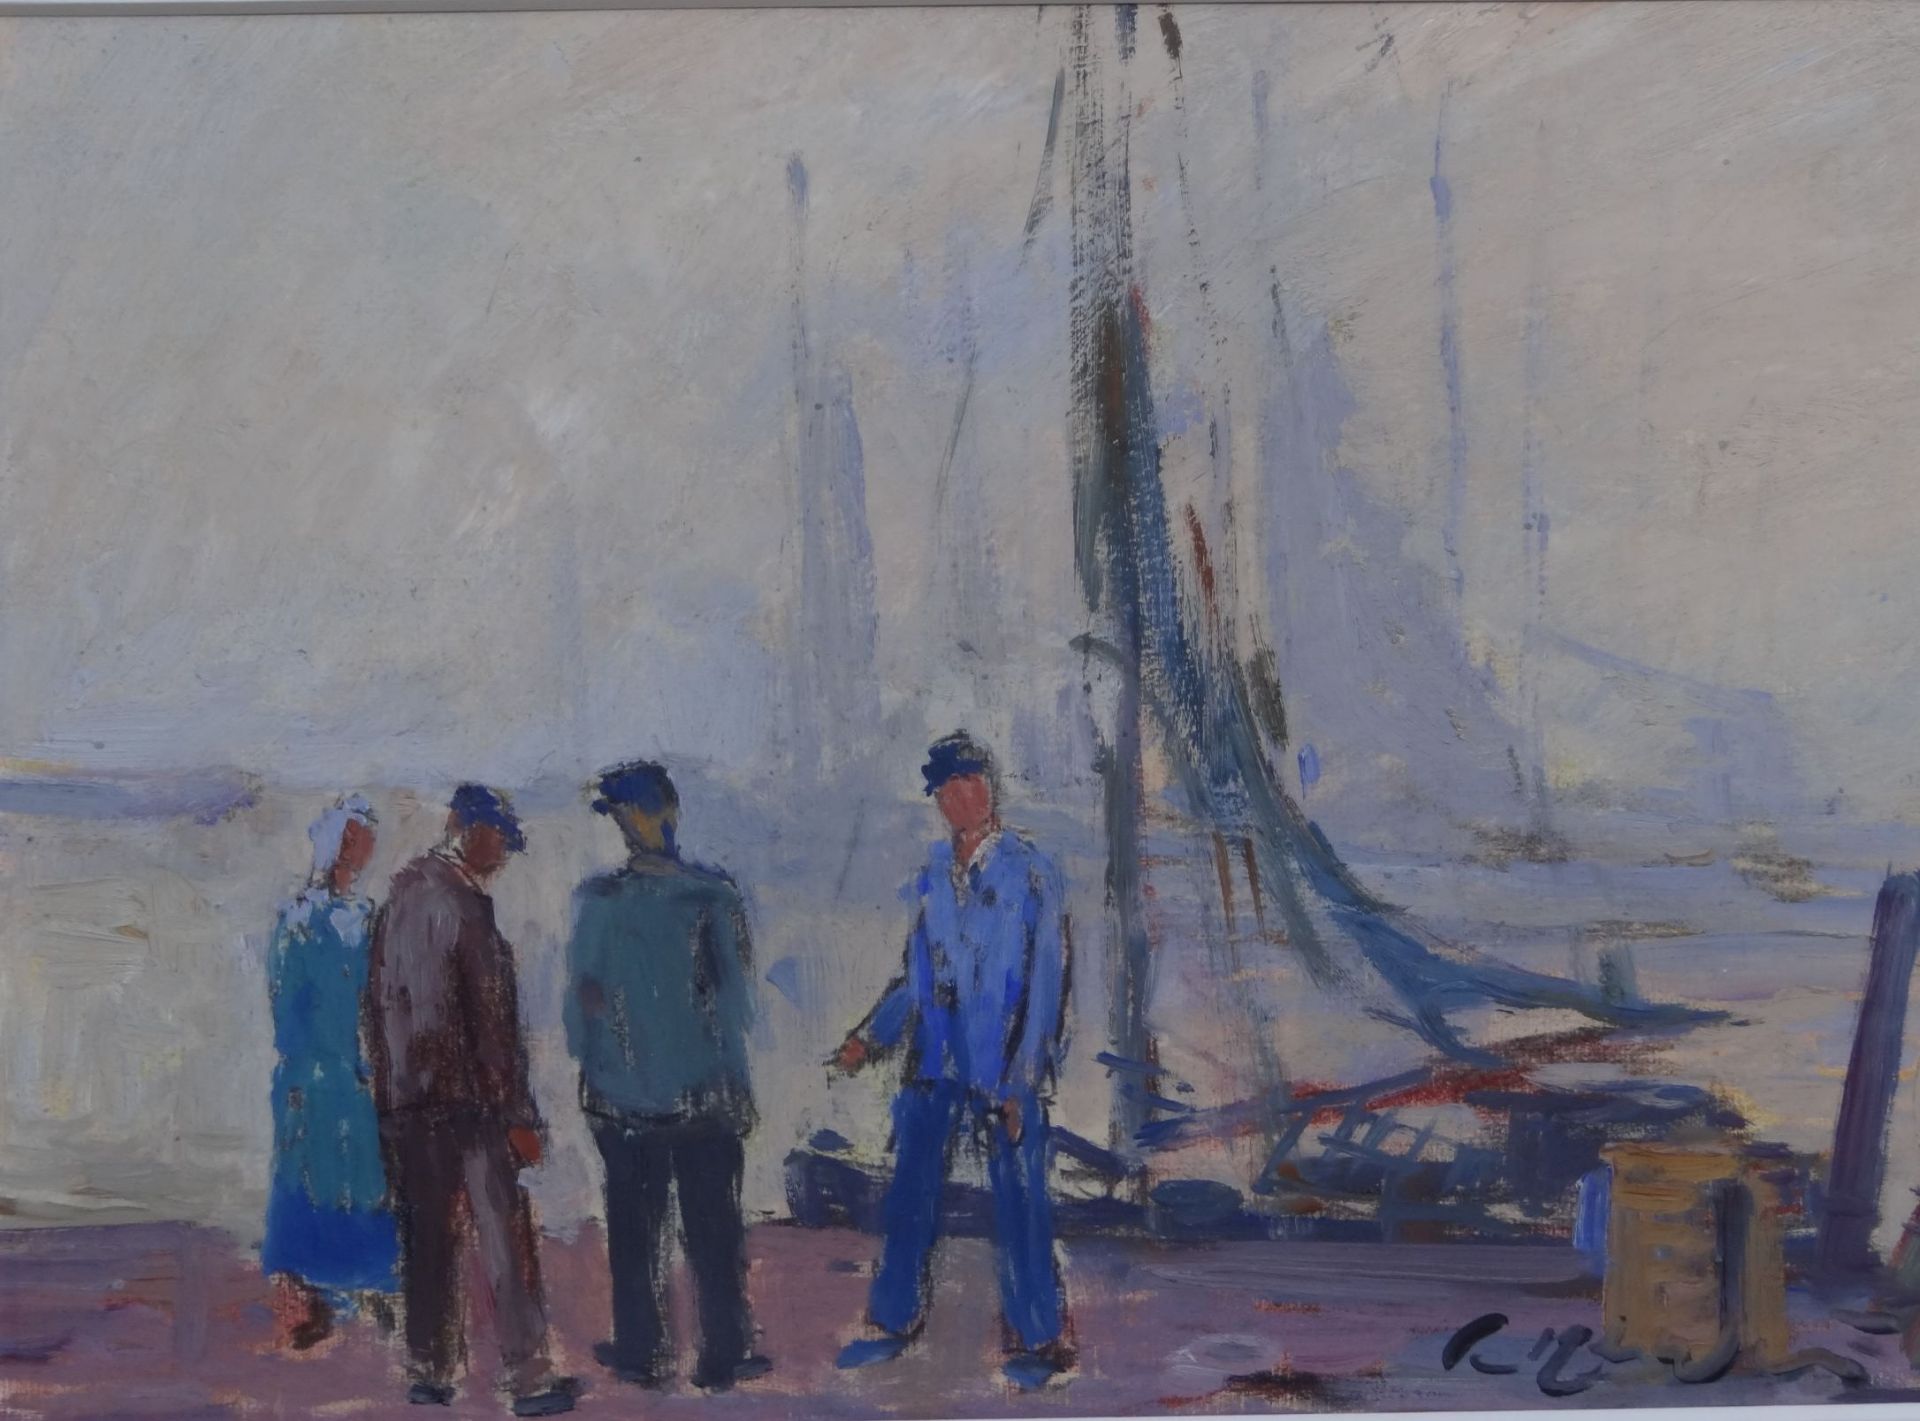 Paul Ernst WILKE (1894-1972), "Personen vor Fischerboot" Öl/Malfaser, 26x36 cm, gerahmt, RG 35x45